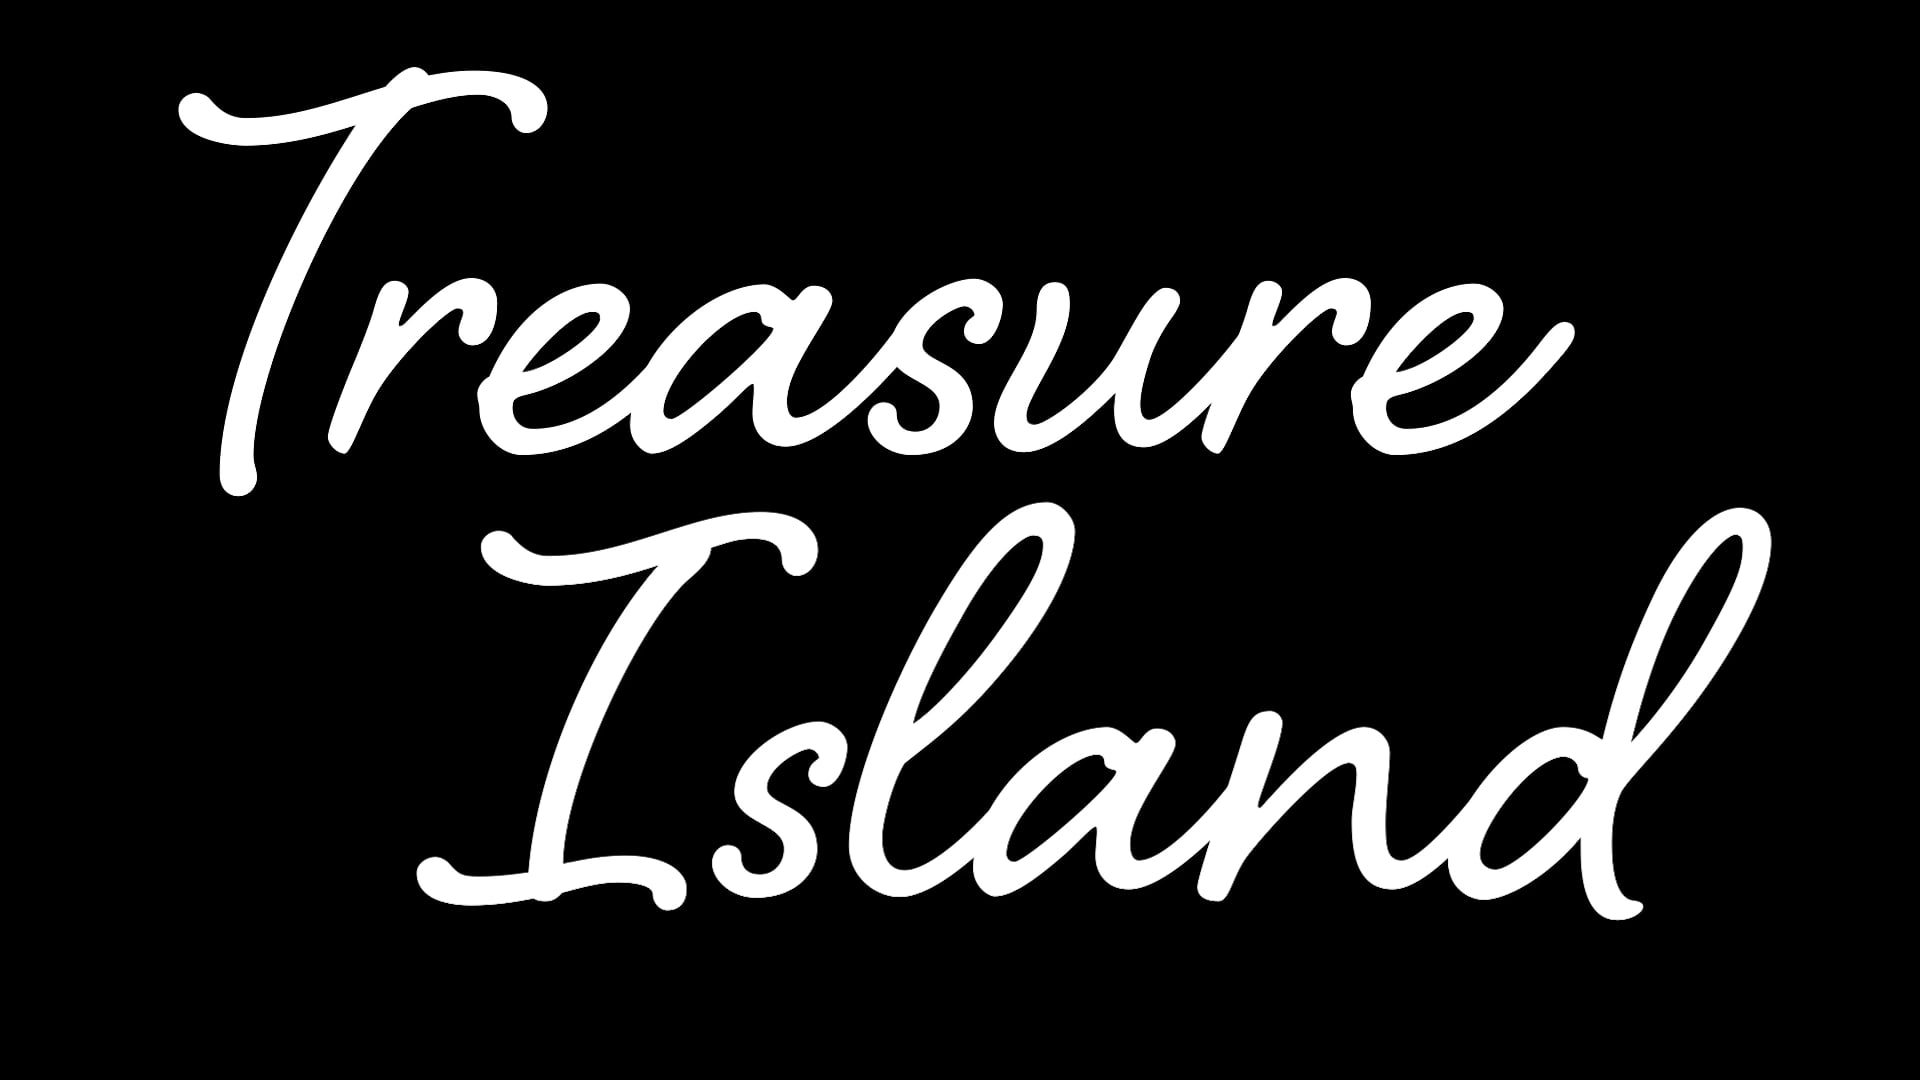 Treasure Island Trailer